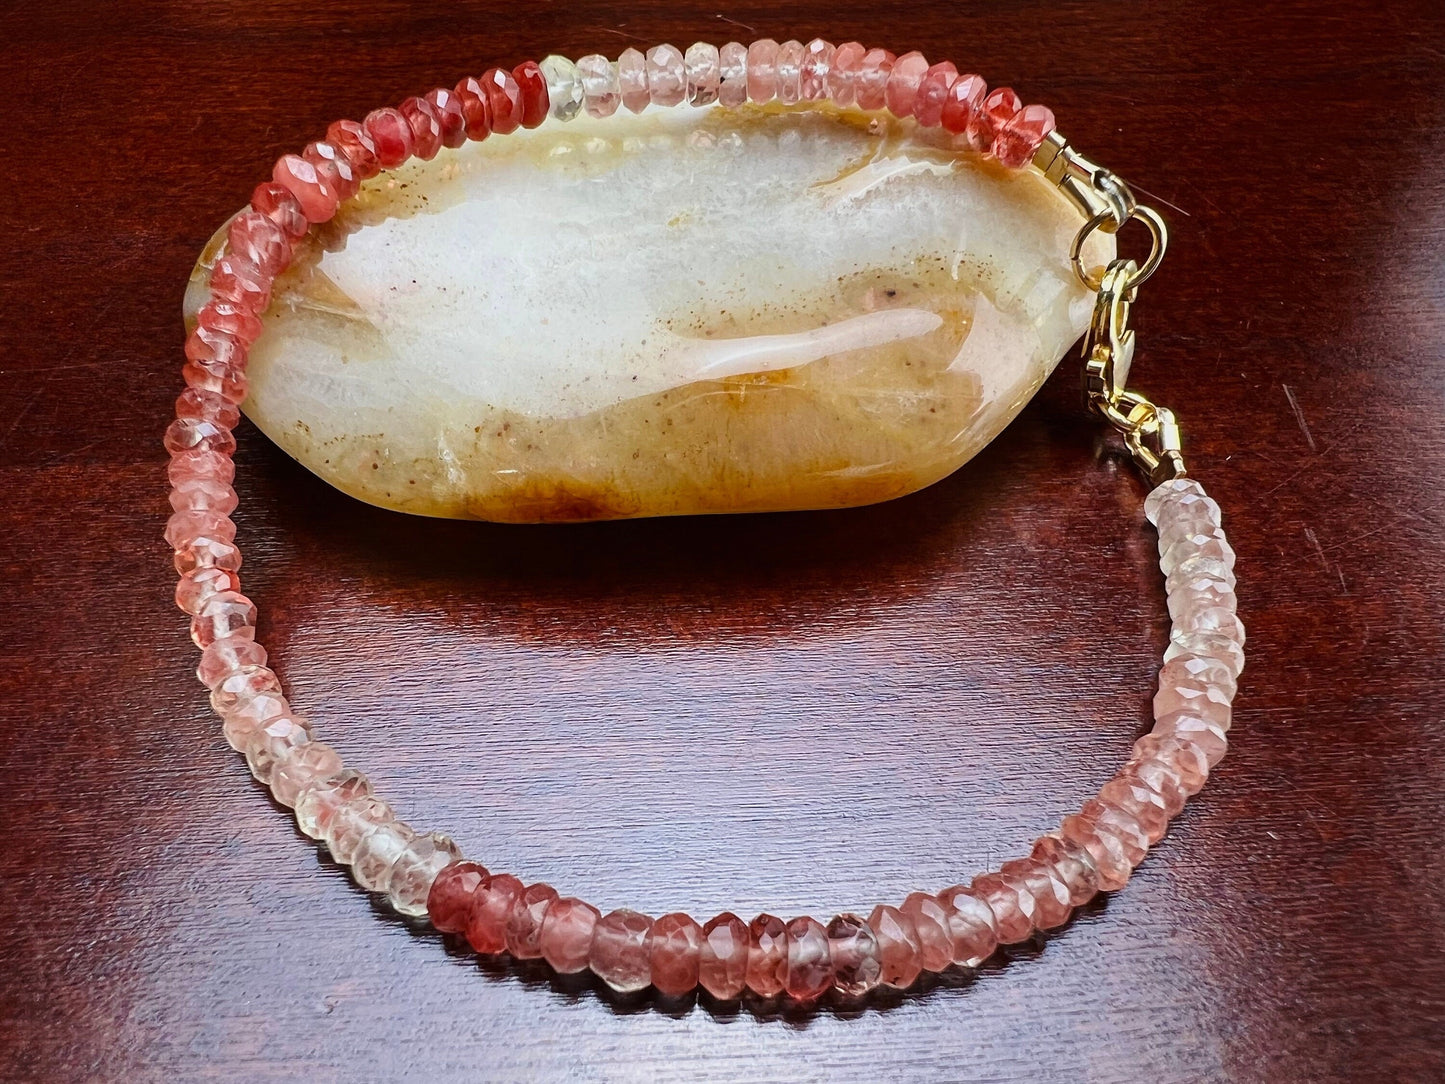 Andesine red labradorite 3.5-4mm shaded Faceted Rondelle bracelet in 14k Gold Filled or 925 Sterling Silver, energy chakra Yoga gift